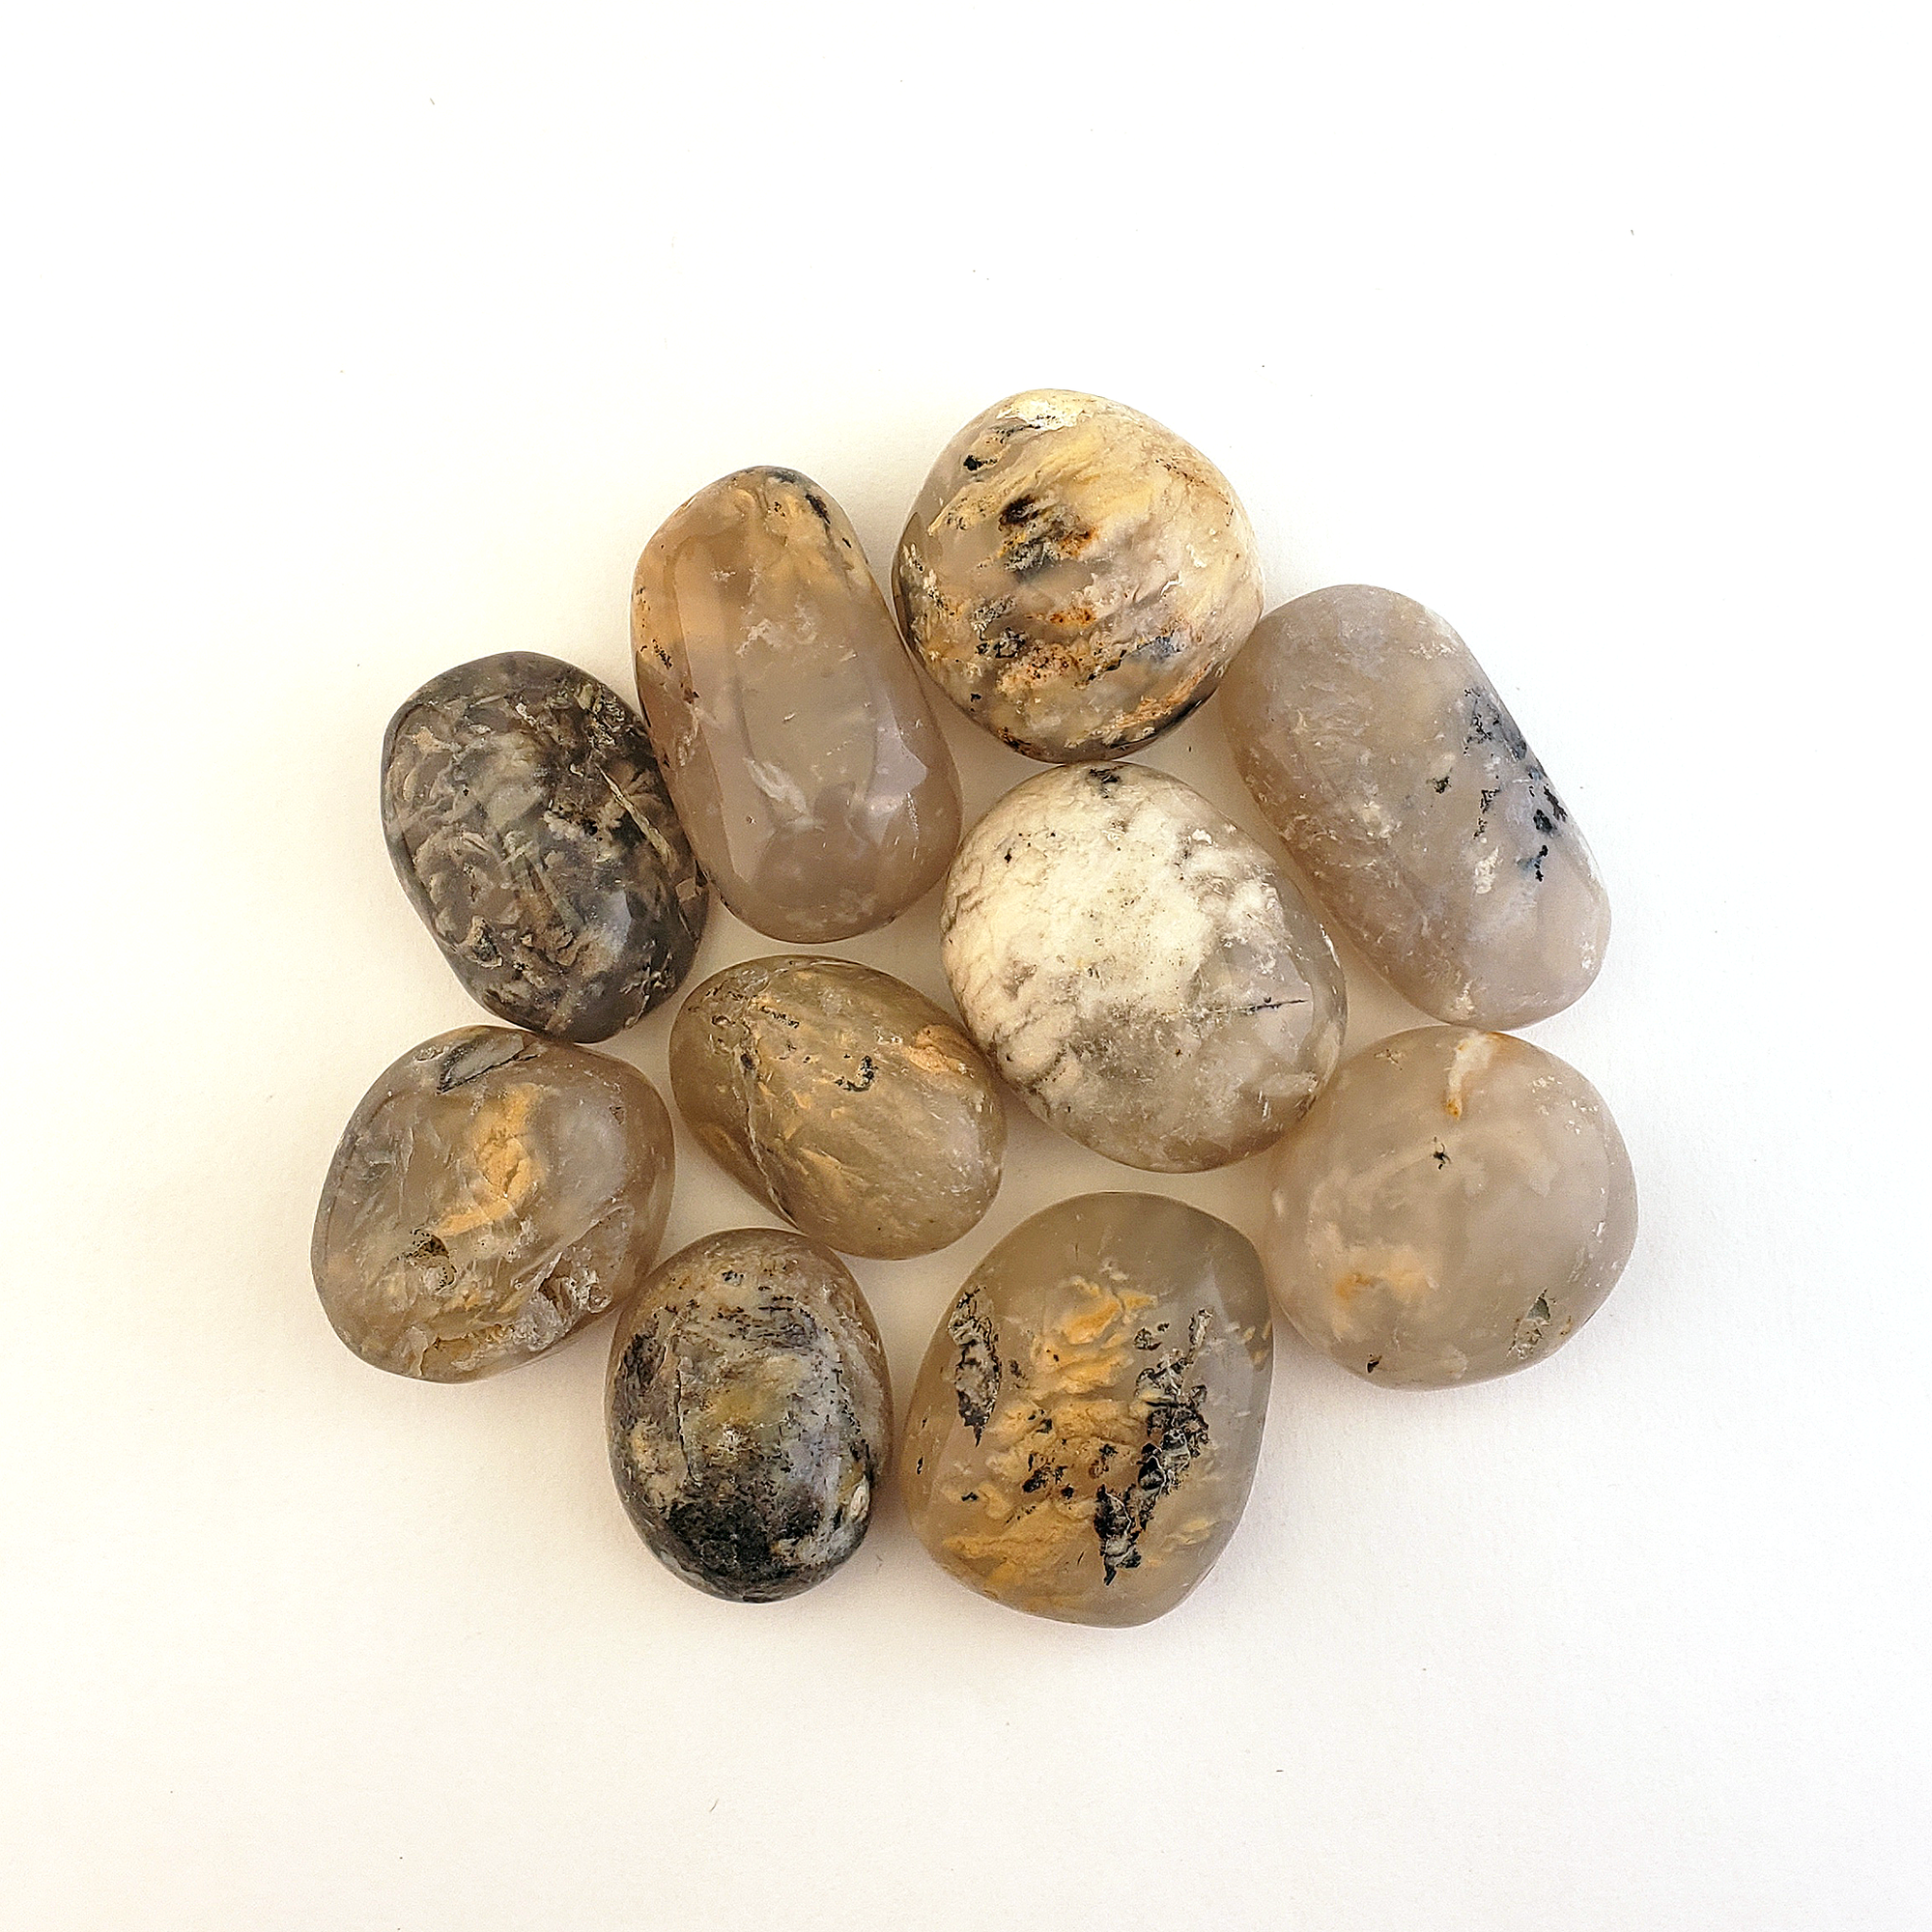 Dendritic Plume Agate Natural Tumbled Stone - One Stone - White Background